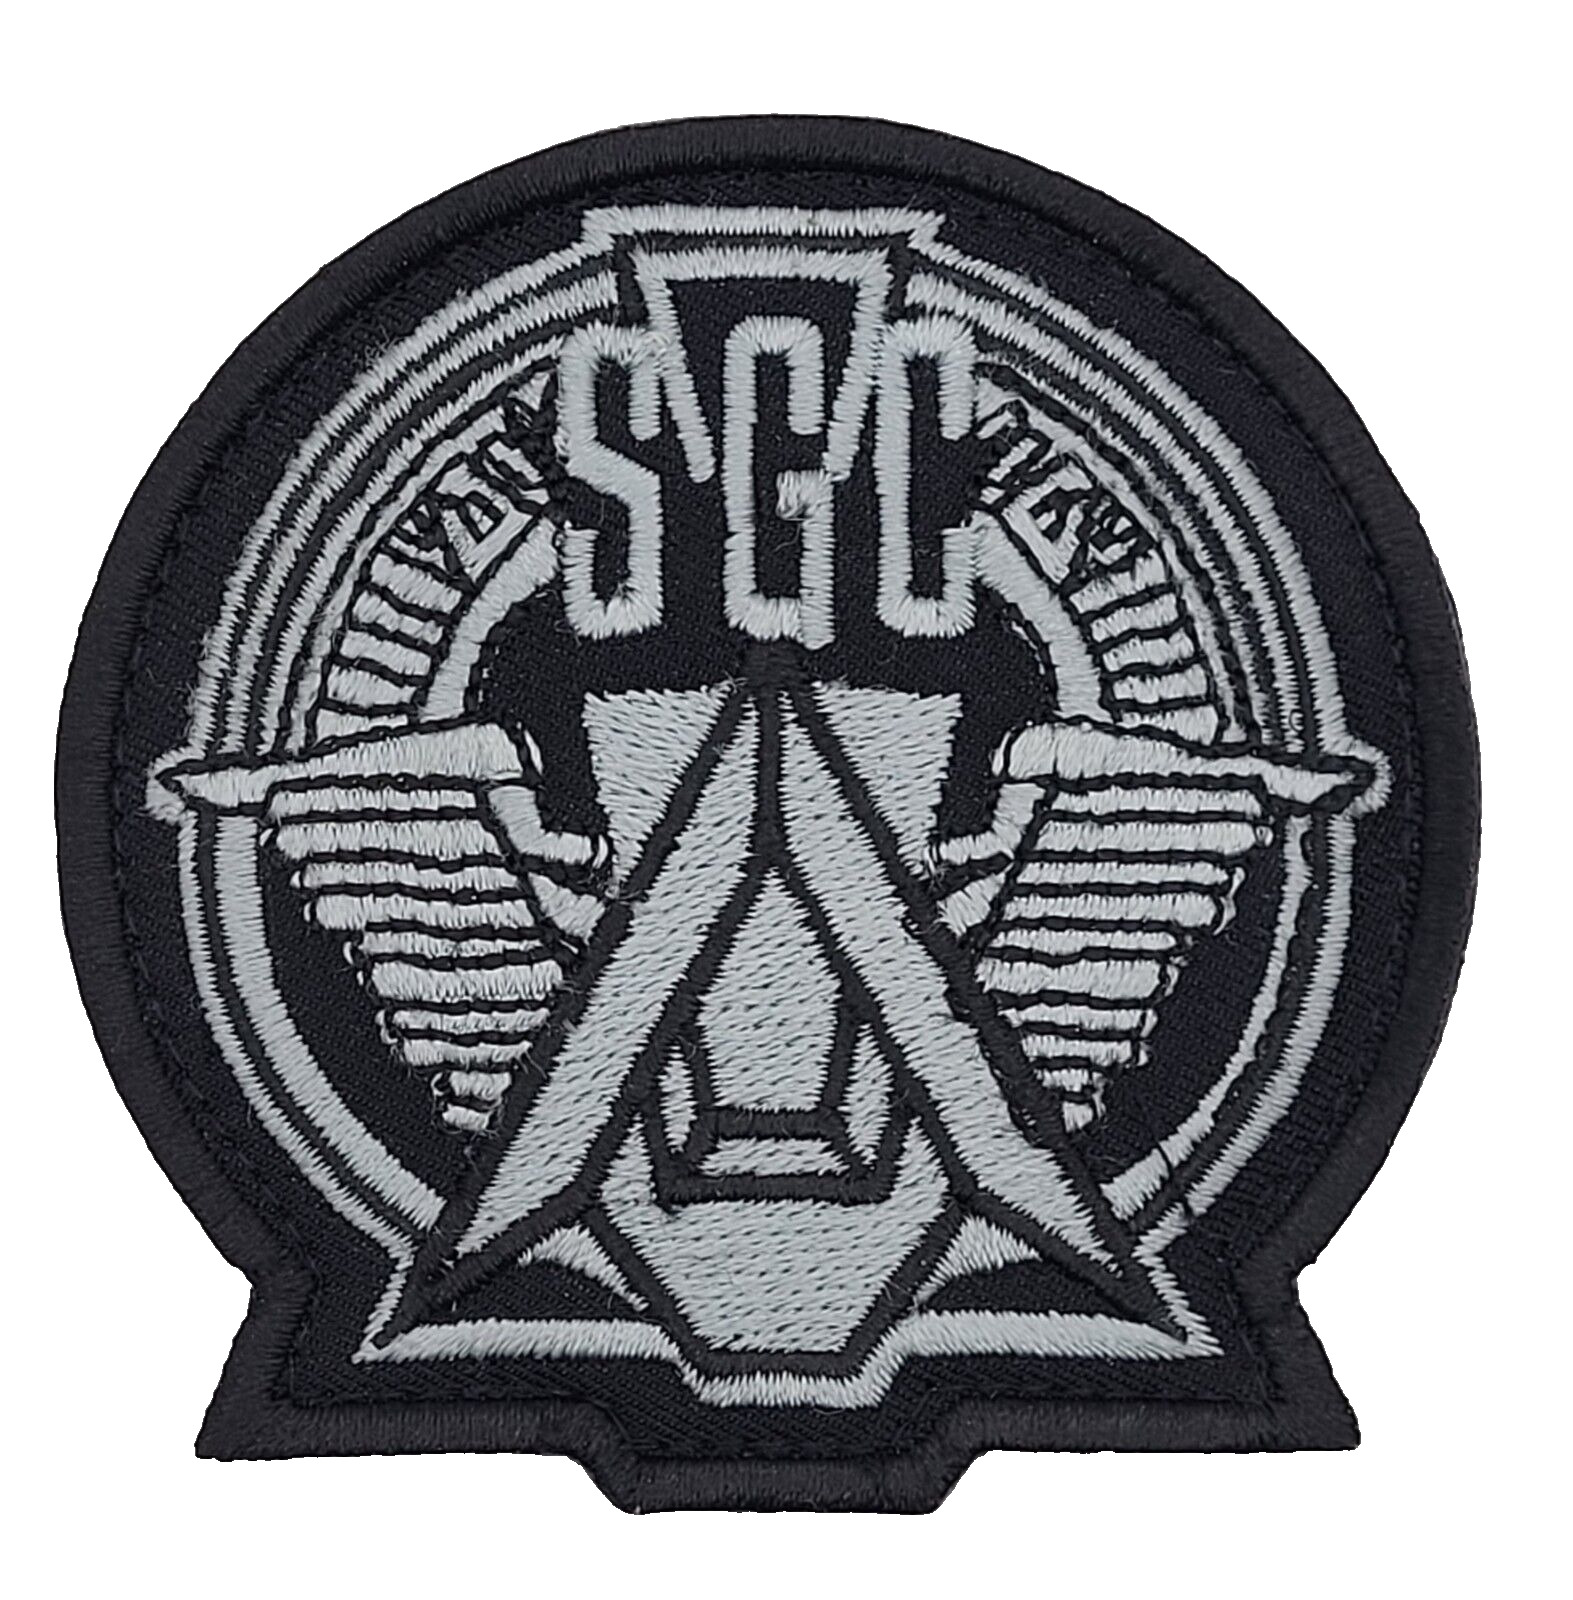 Stargate SG-1 (Prometheus) SGC Logo 3.0 inch Embroidered Patch [Hook Fastener]